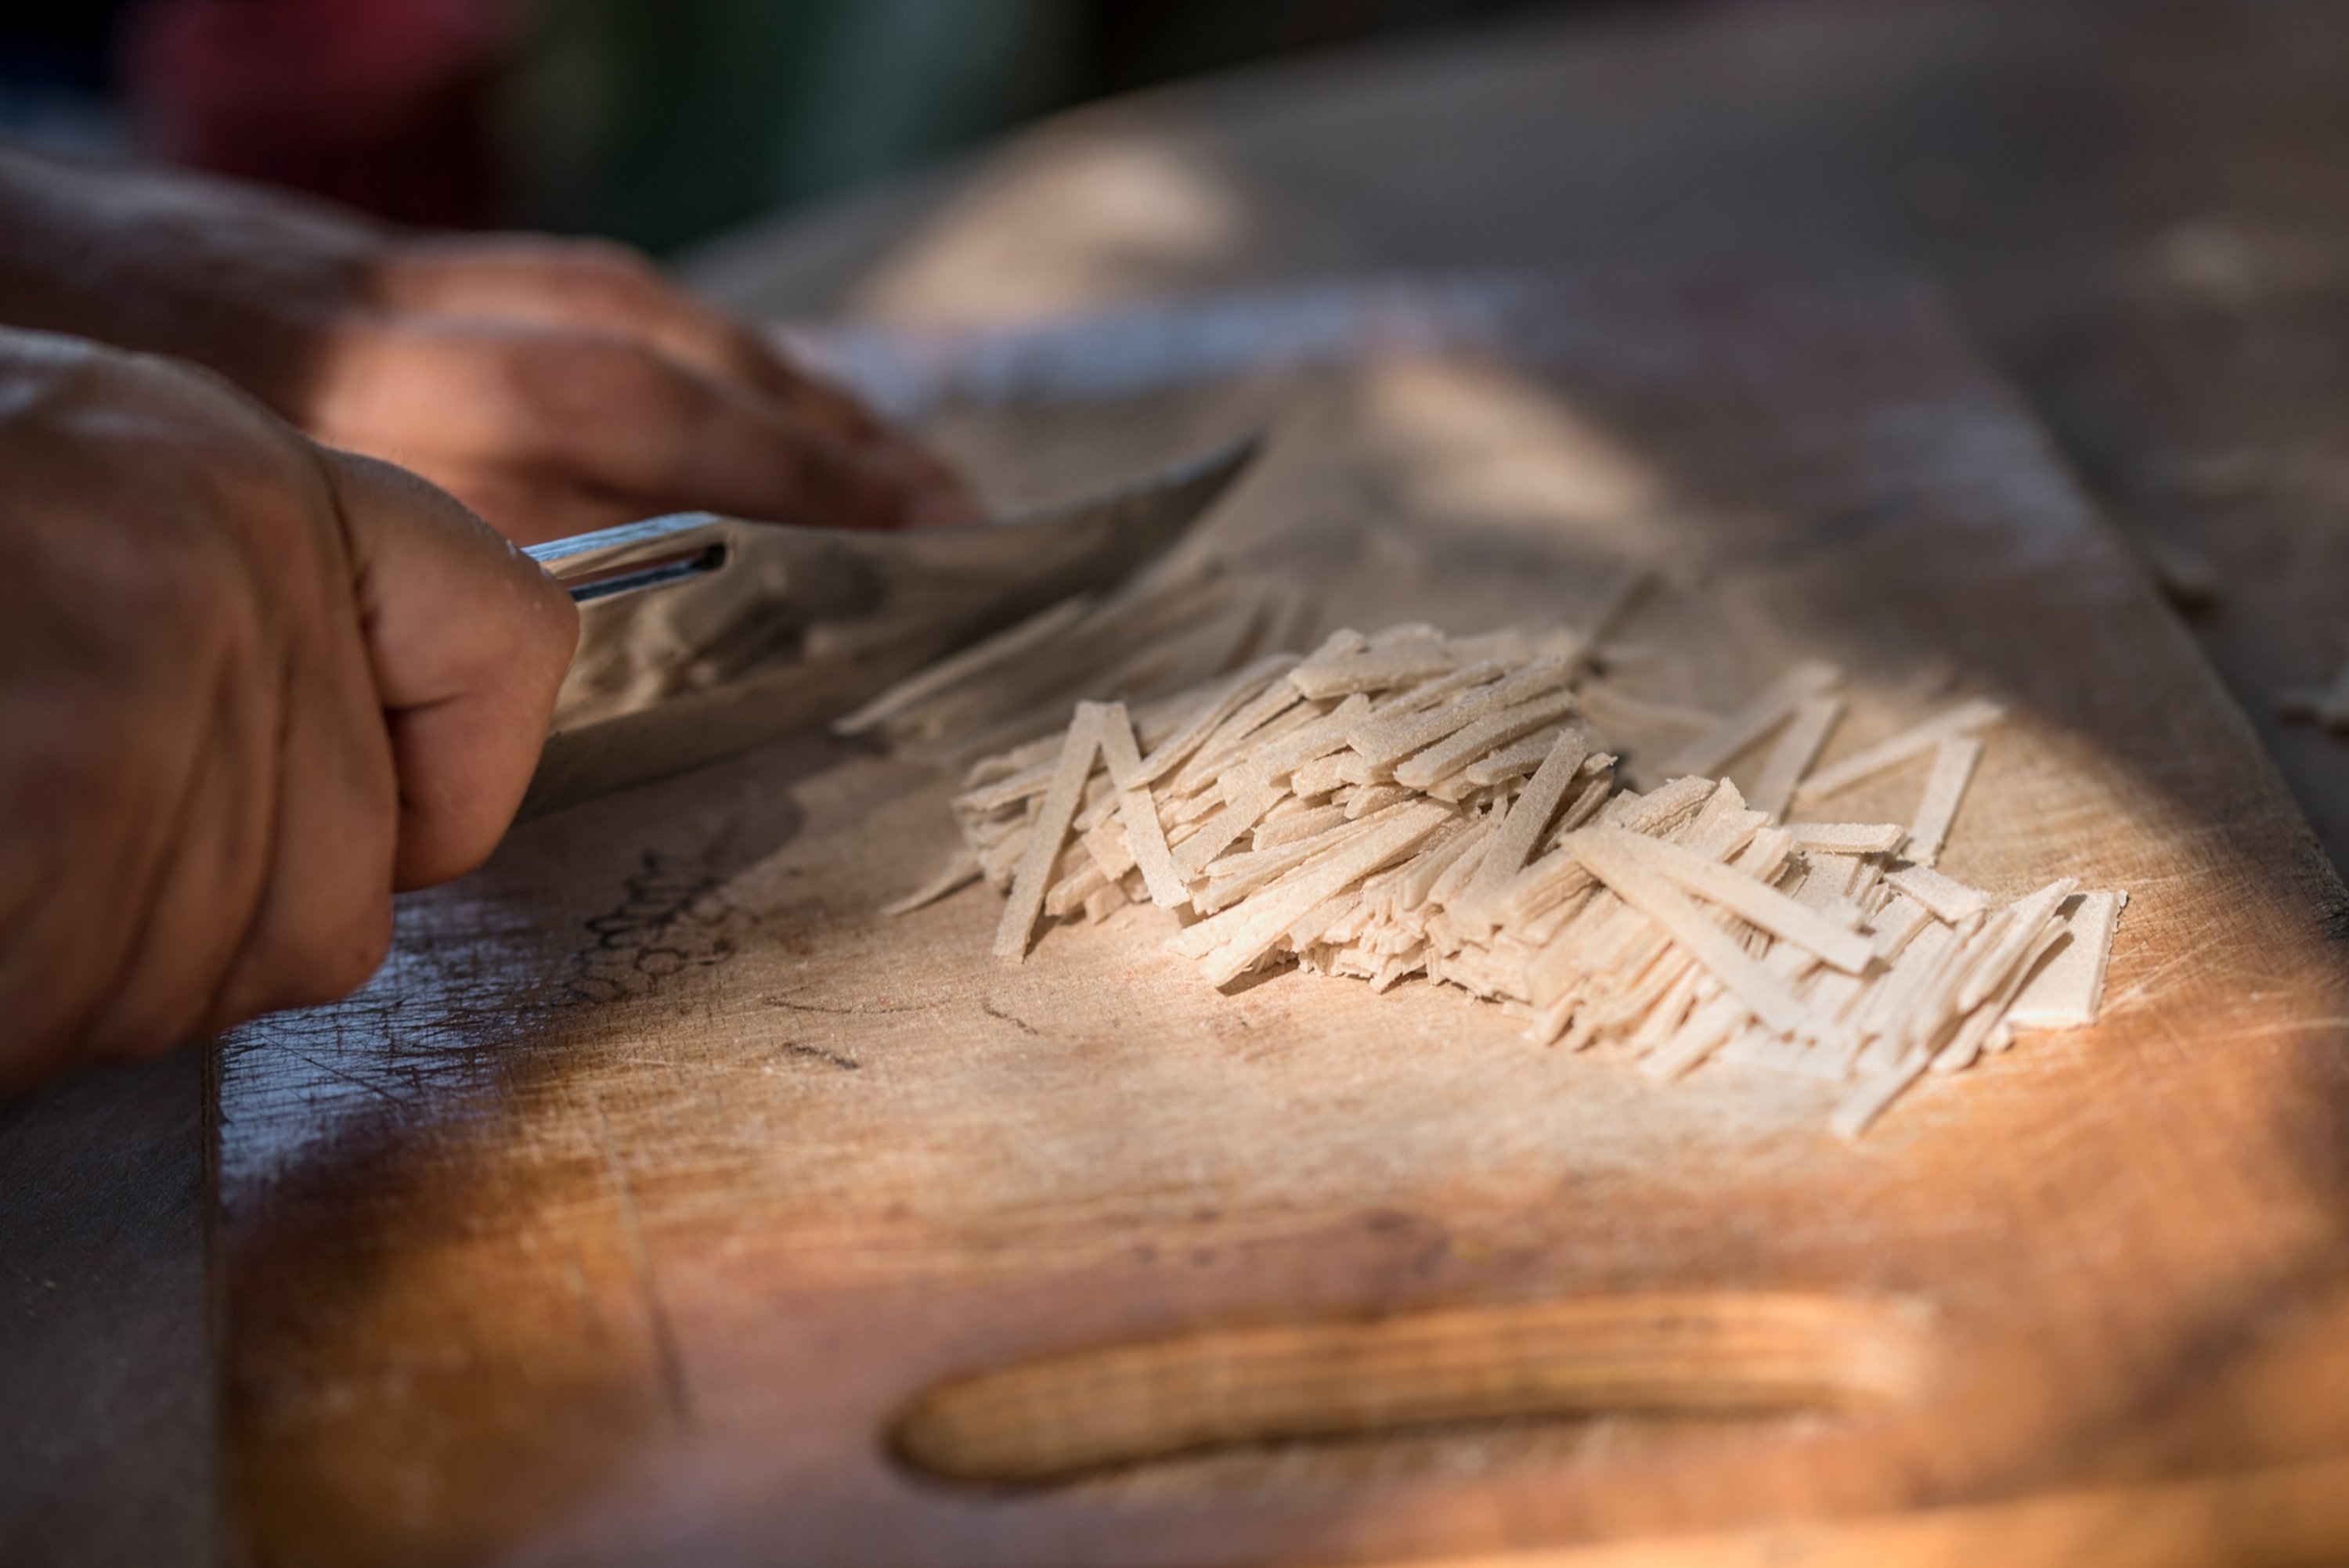 After being dried, erişte is cut into small rectangular pieces. (Shutterstock)